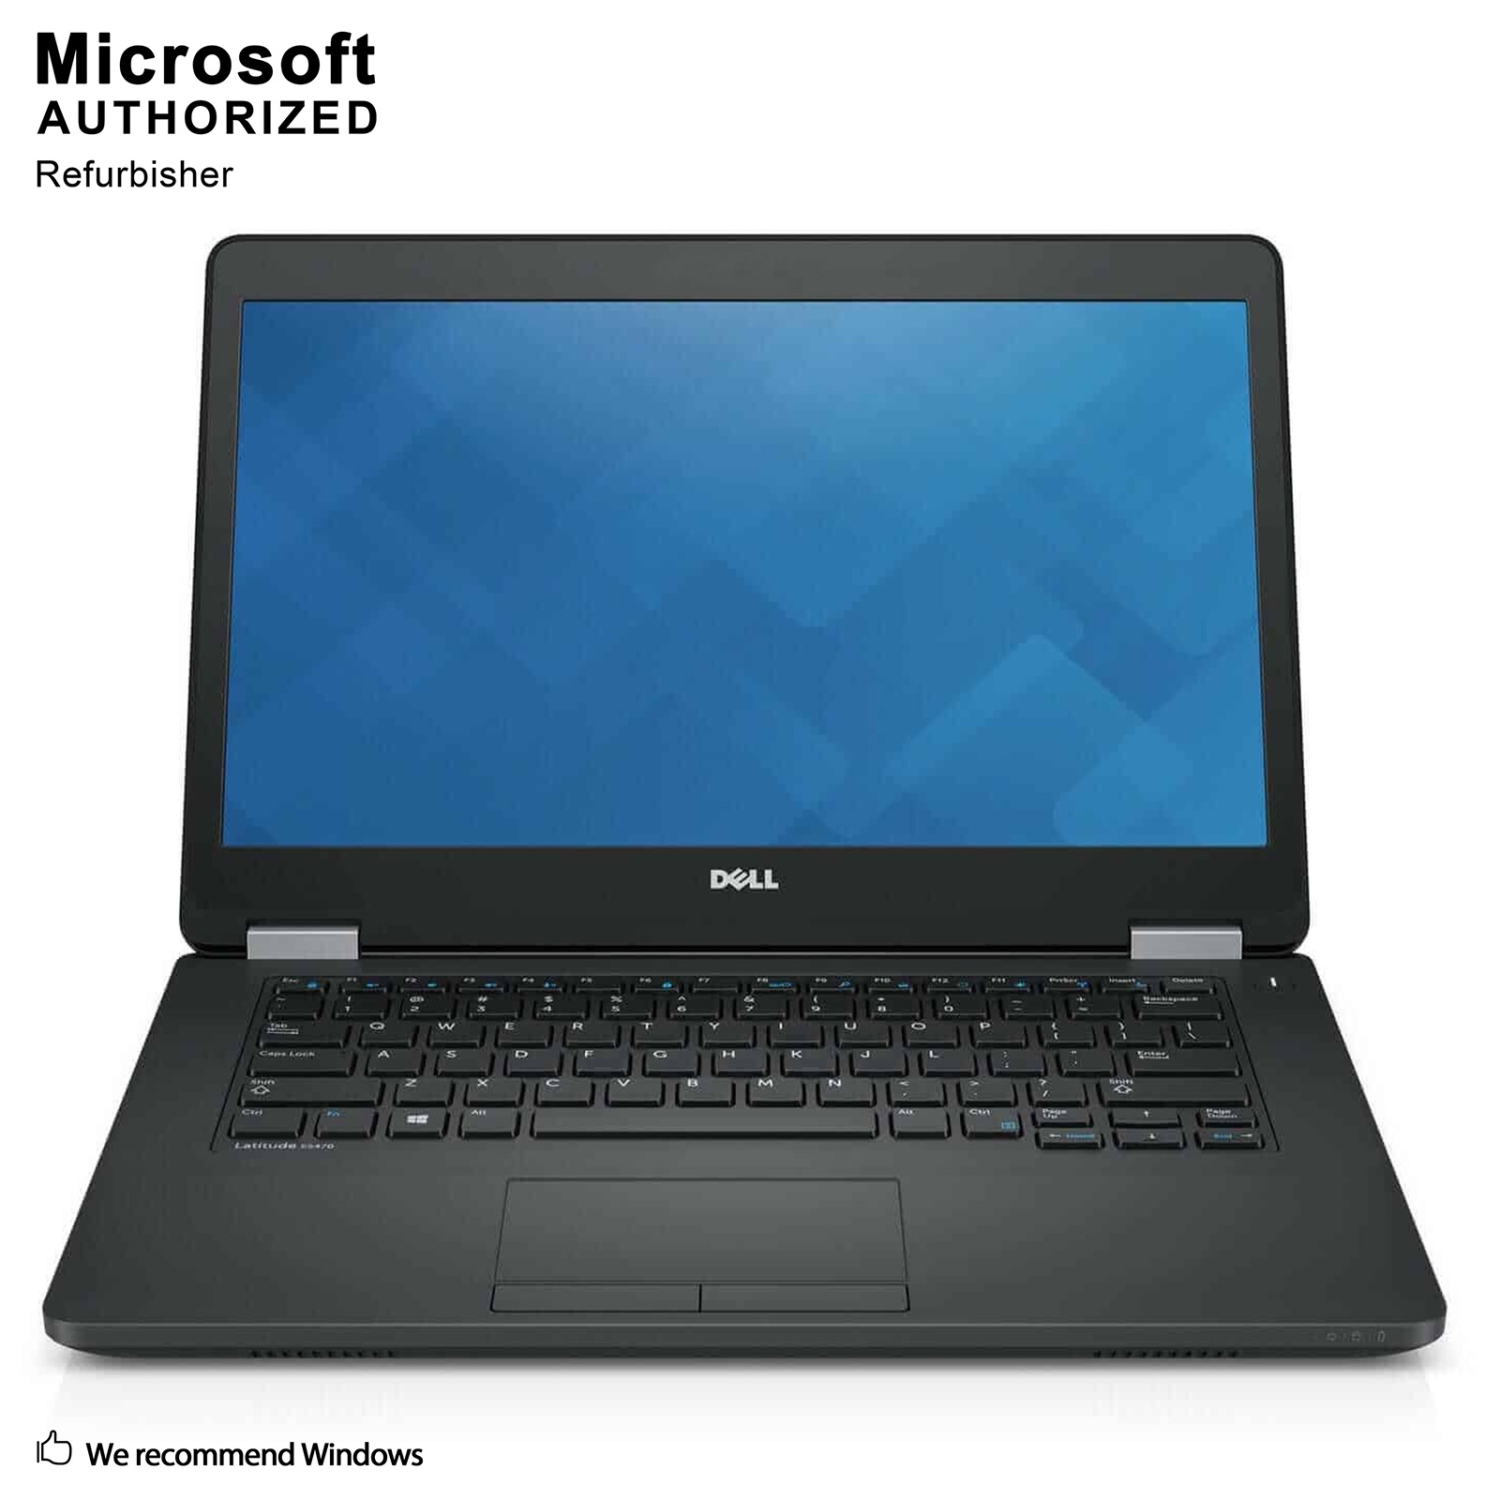 Refurbished (Excellent) - Dell Latitude E5470 14" Laptop, Intel Core i3 6100U 2.3G, 8G DDR4, 128G SSD, VGA, HDMI, USB 3.0, W10P64 (EN/FR/ES)